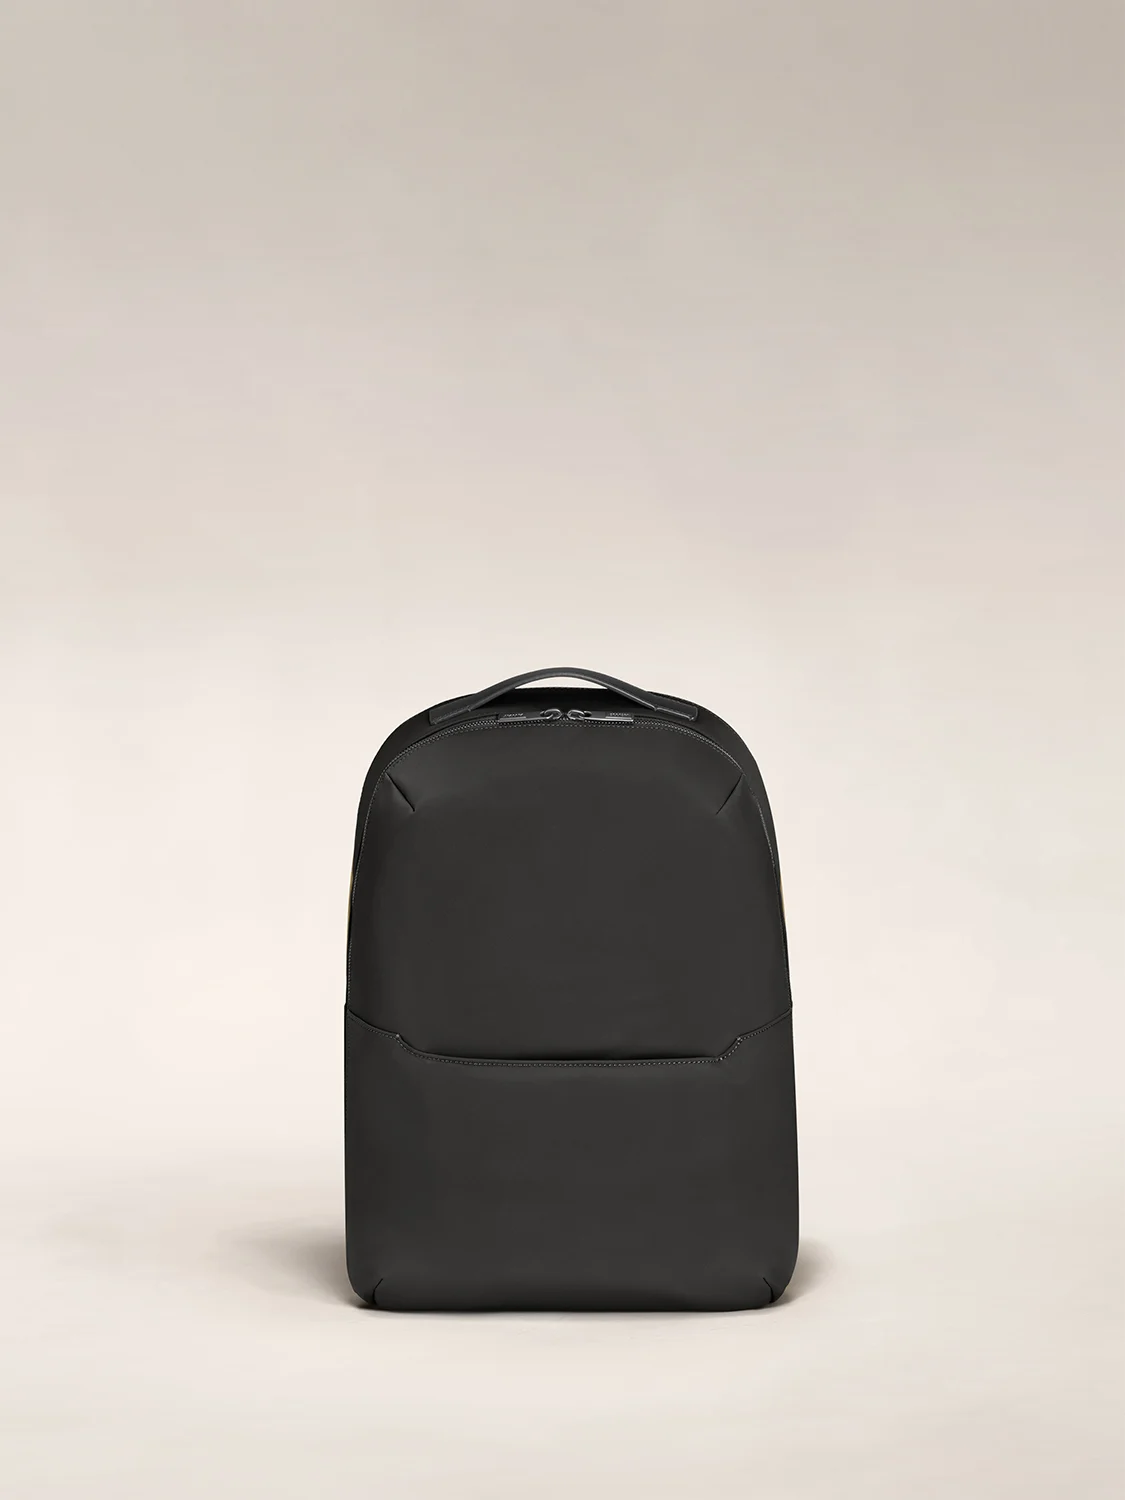 The Zip Backpack in Black nylon